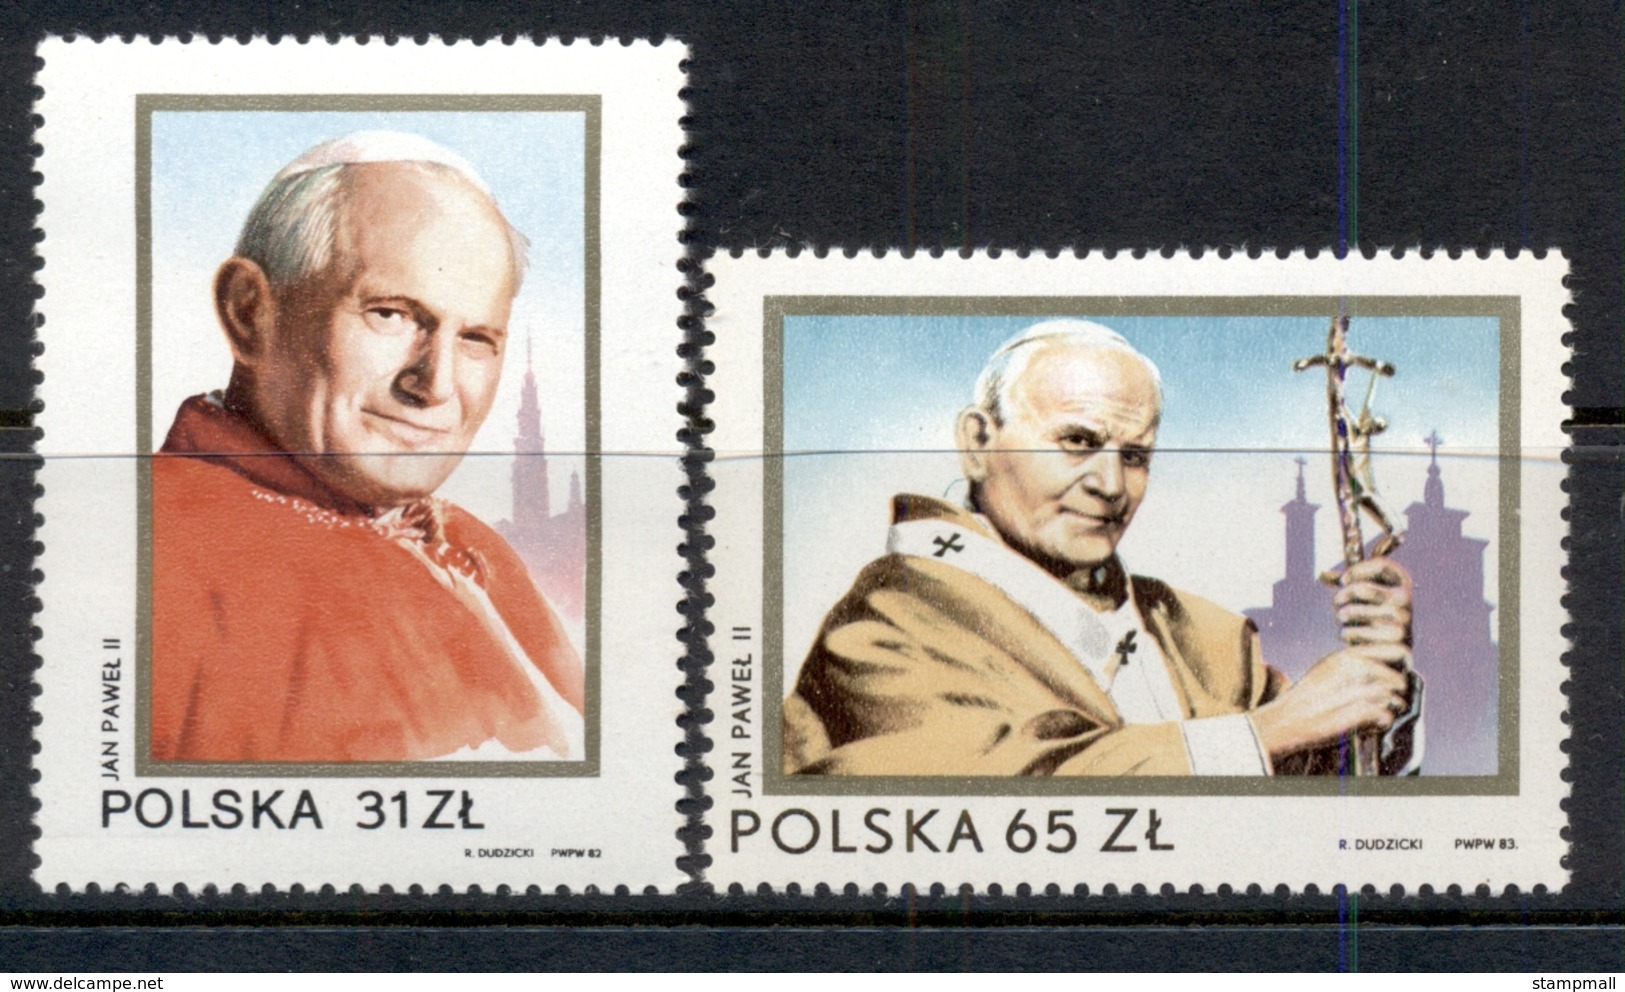 Poland 1983 Second Visit Of Pope John Paul II MUH - Unused Stamps